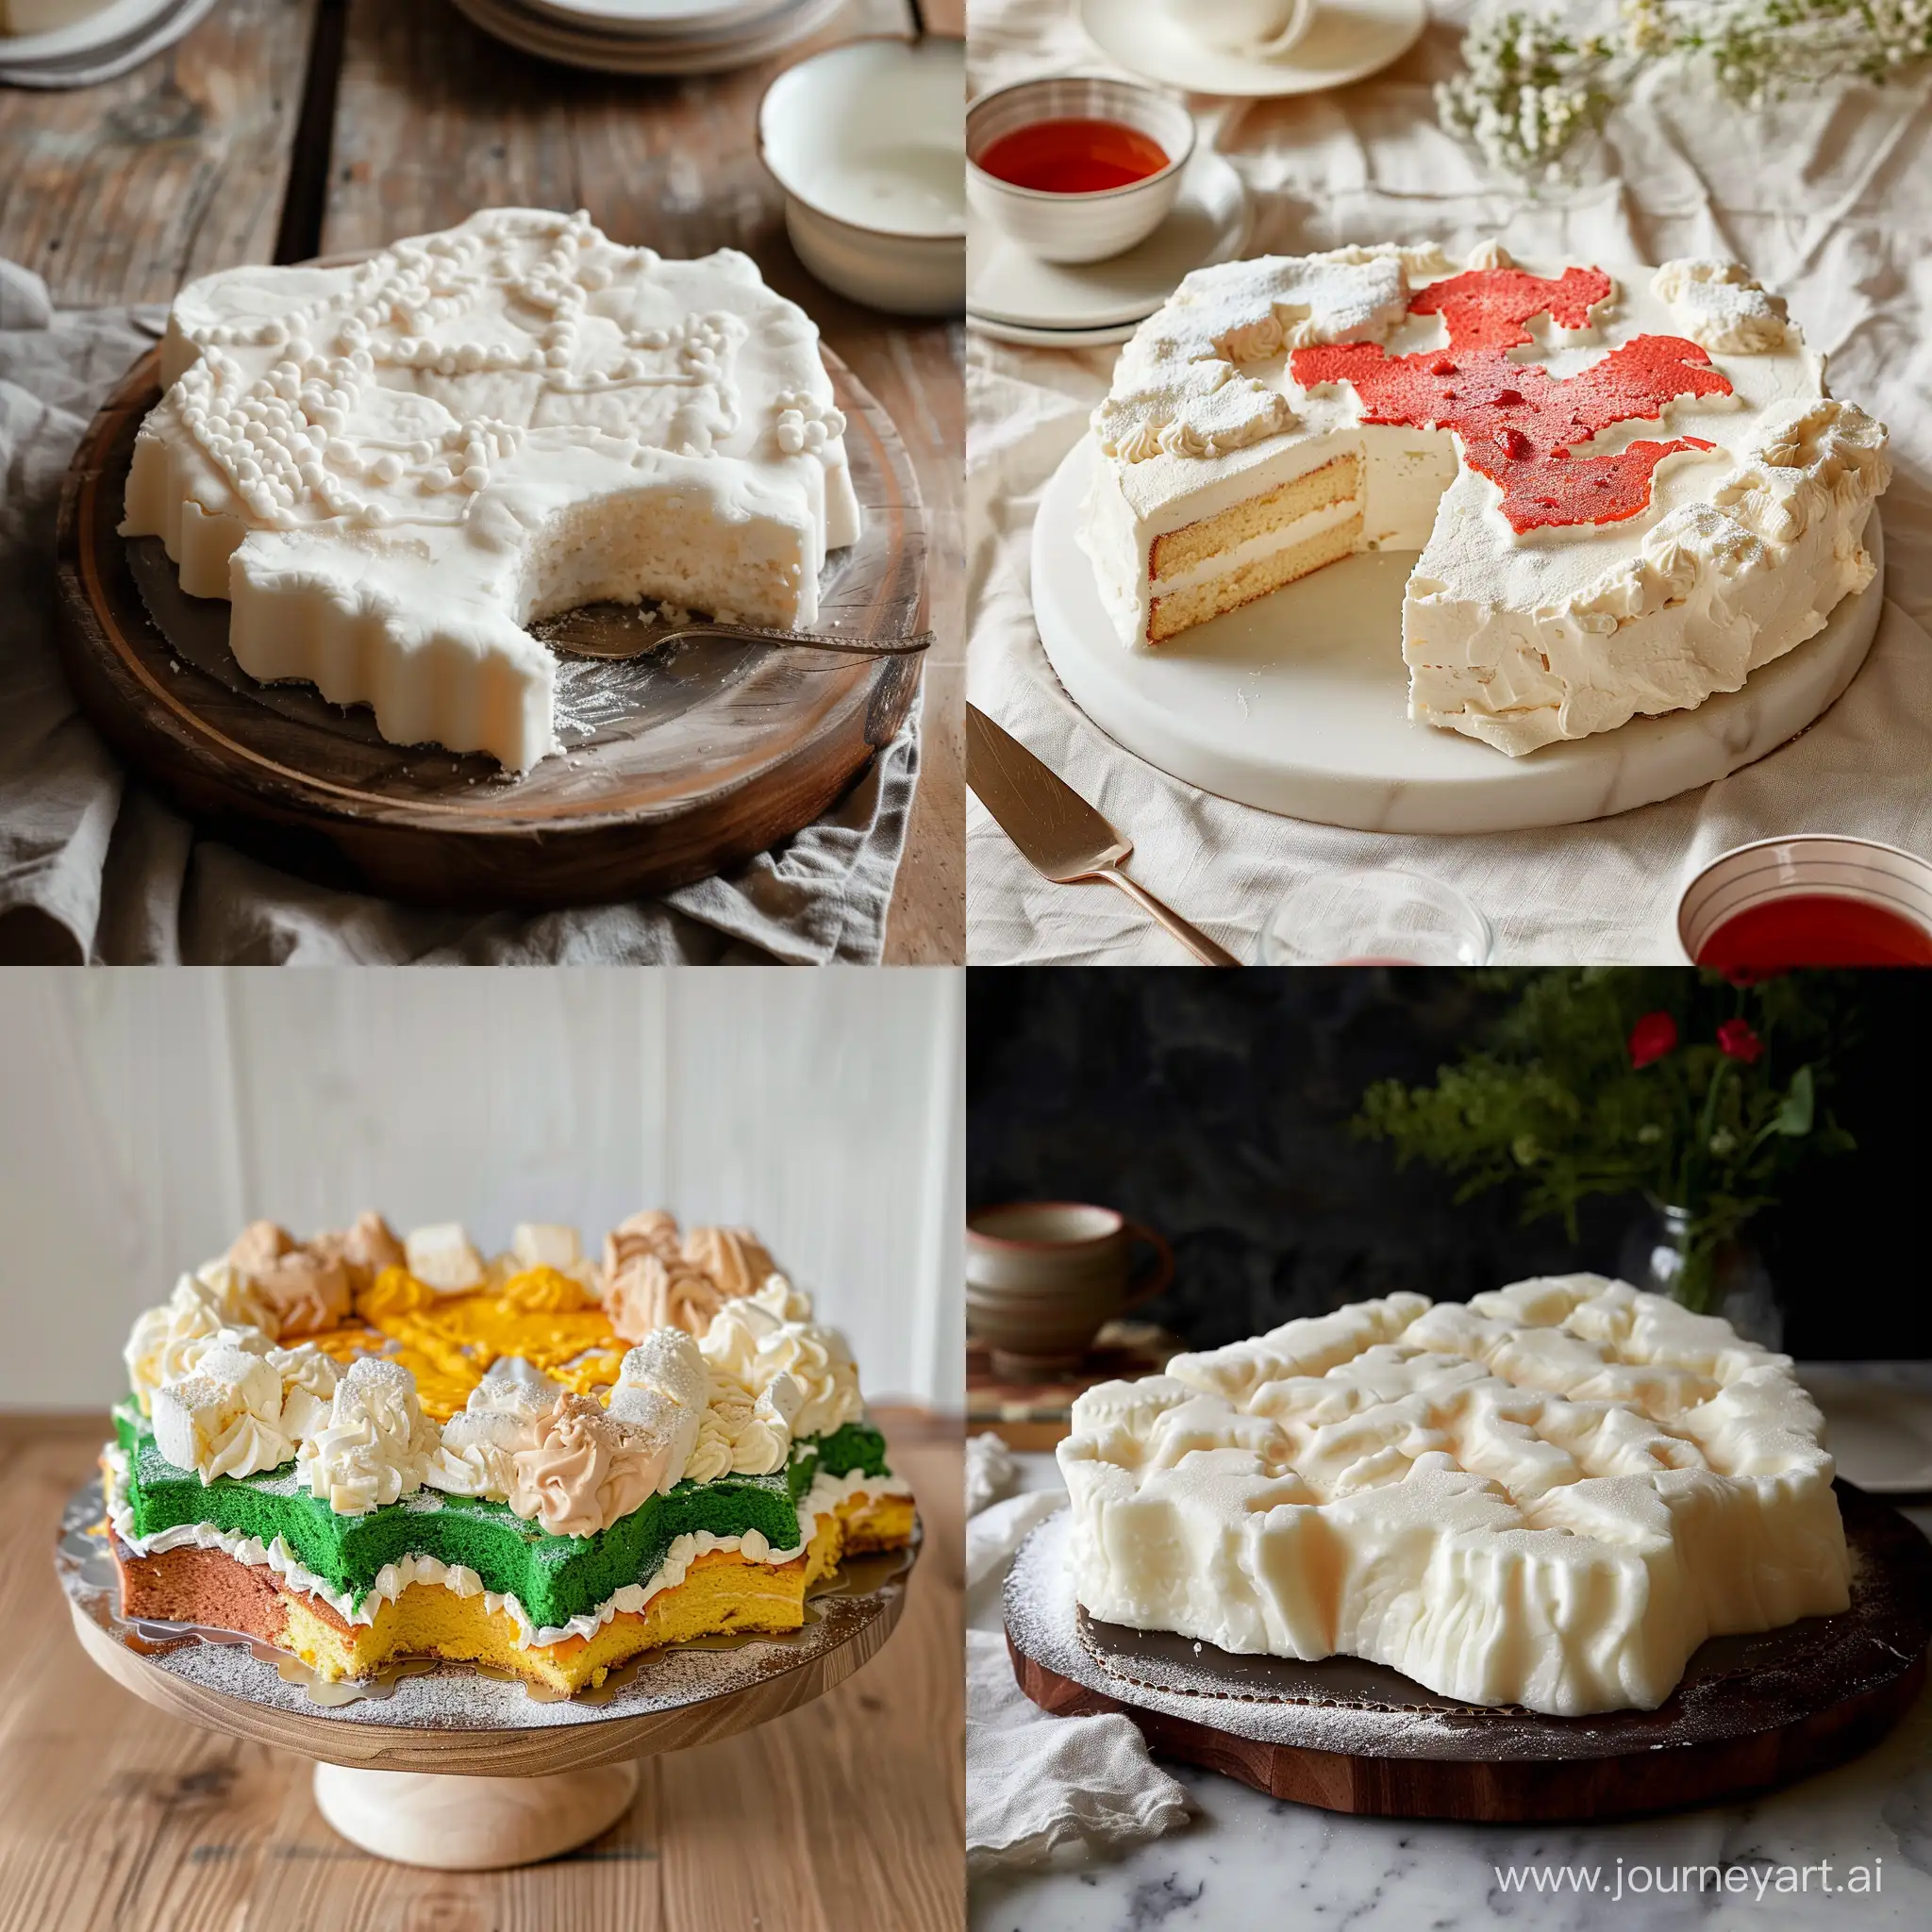 Polandshaped-Cake-Delicious-Dessert-Artwork-Inspired-by-Poland